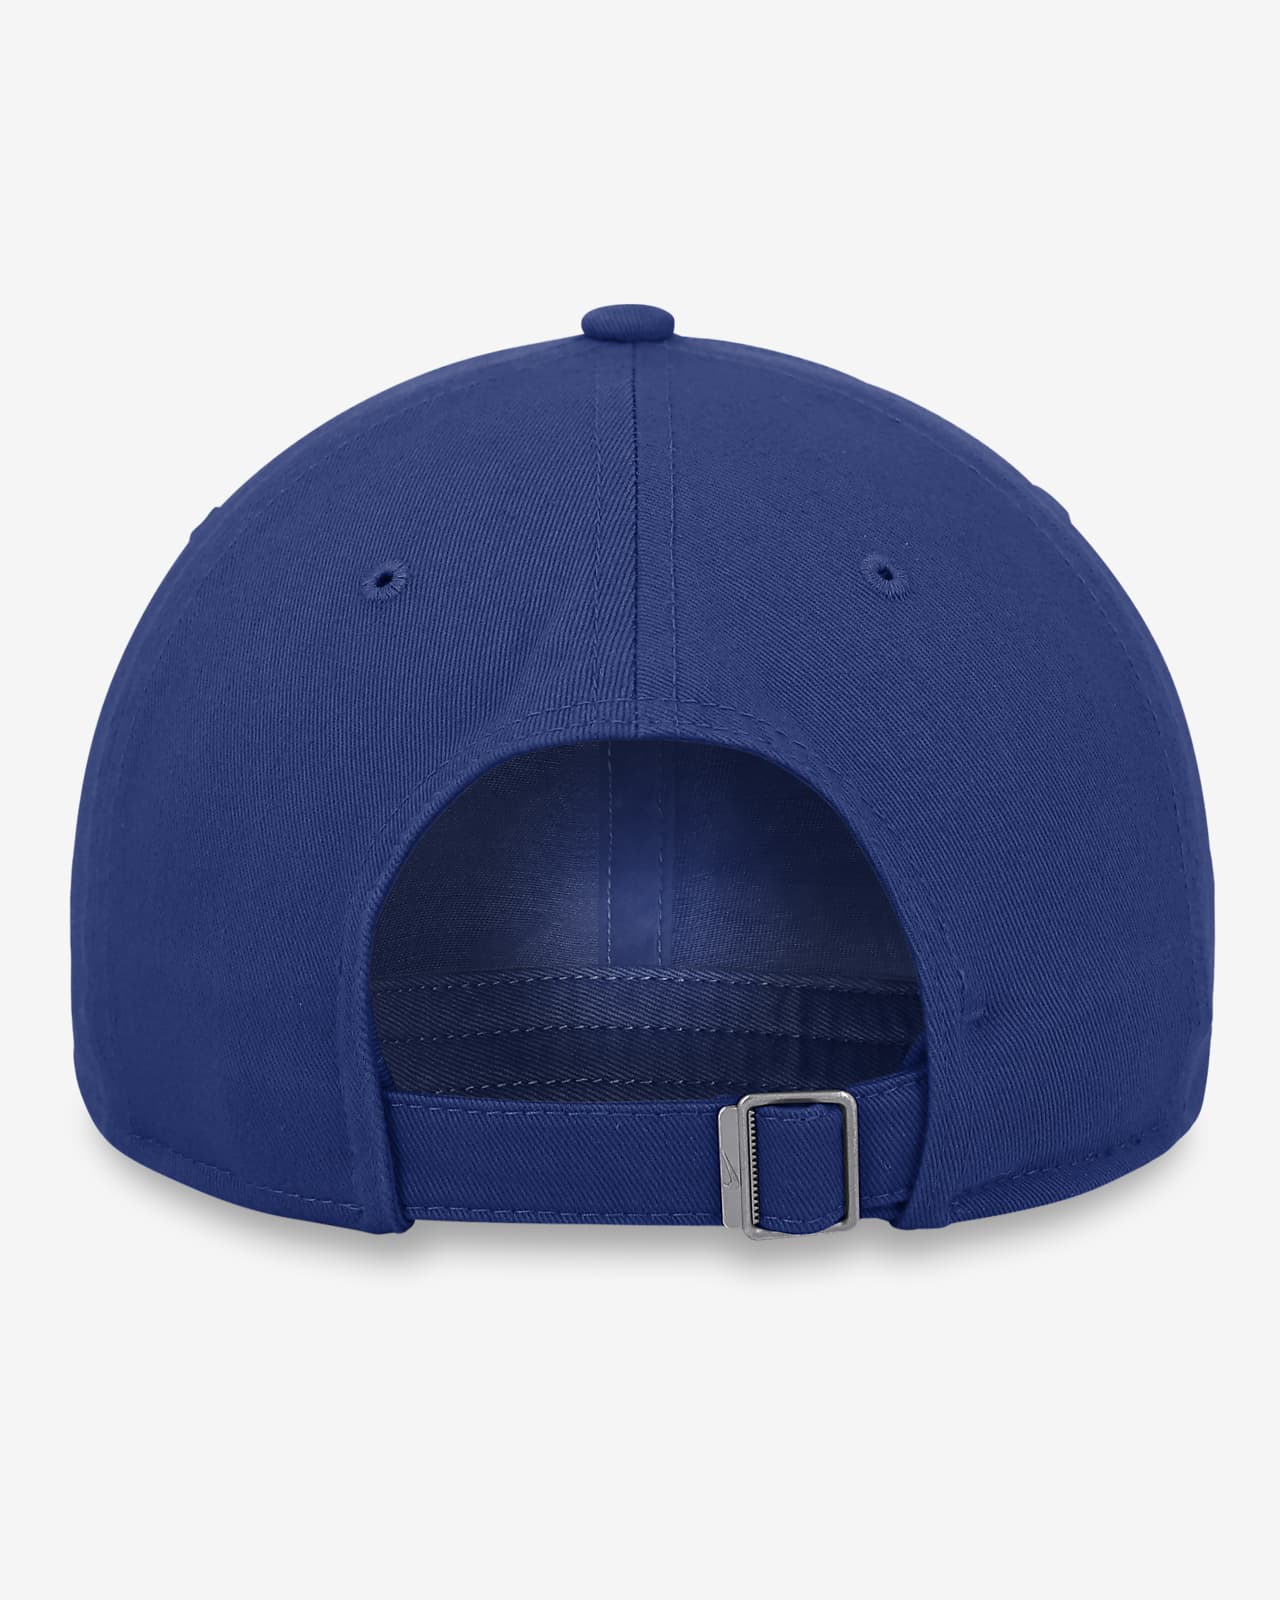 Men's New York Yankees Nike Navy Logo Performance Heritage 86 Adjustable Hat